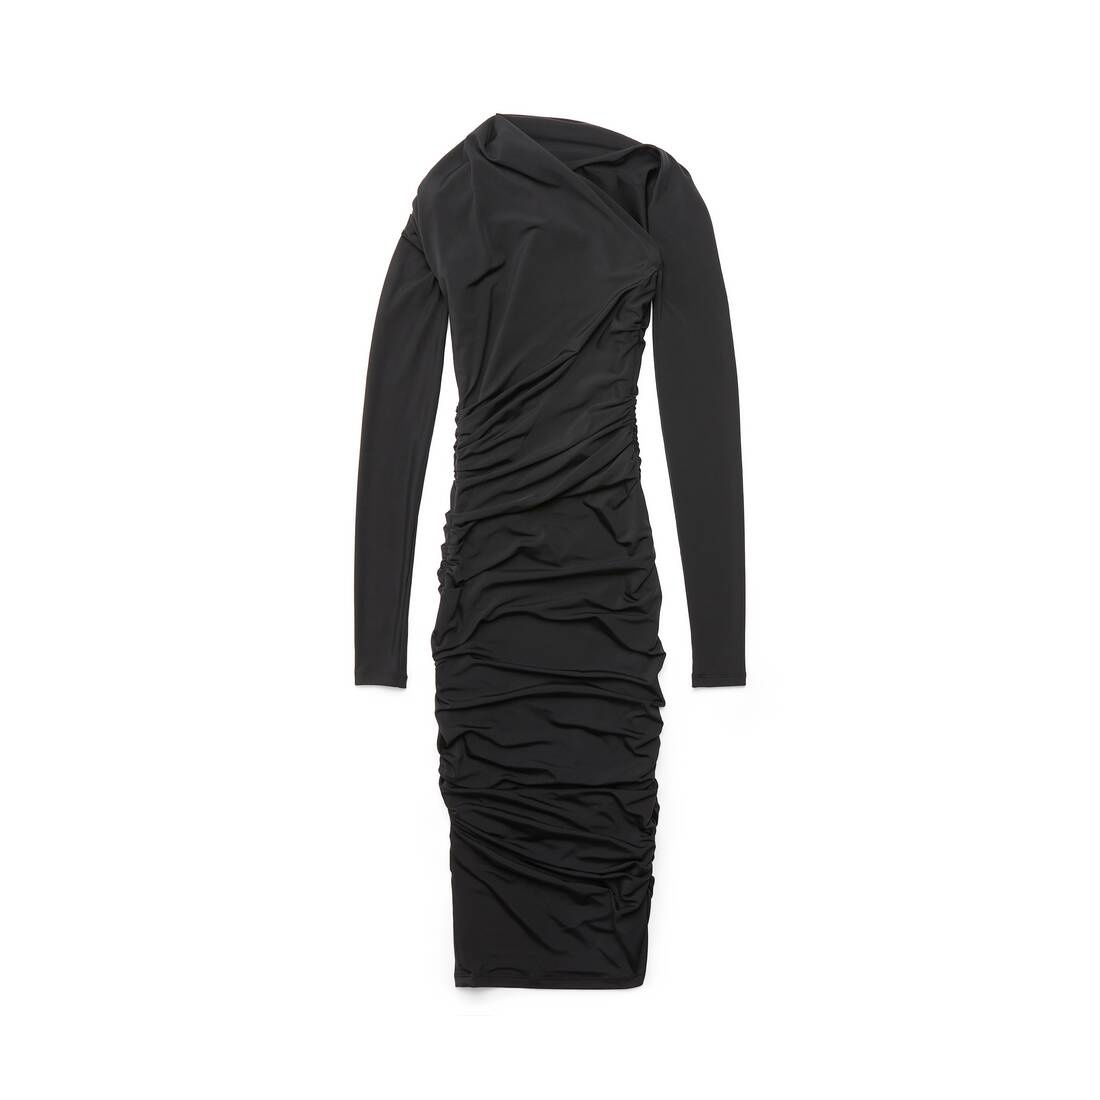 Women's Twisted Mini Dress in Black - 6